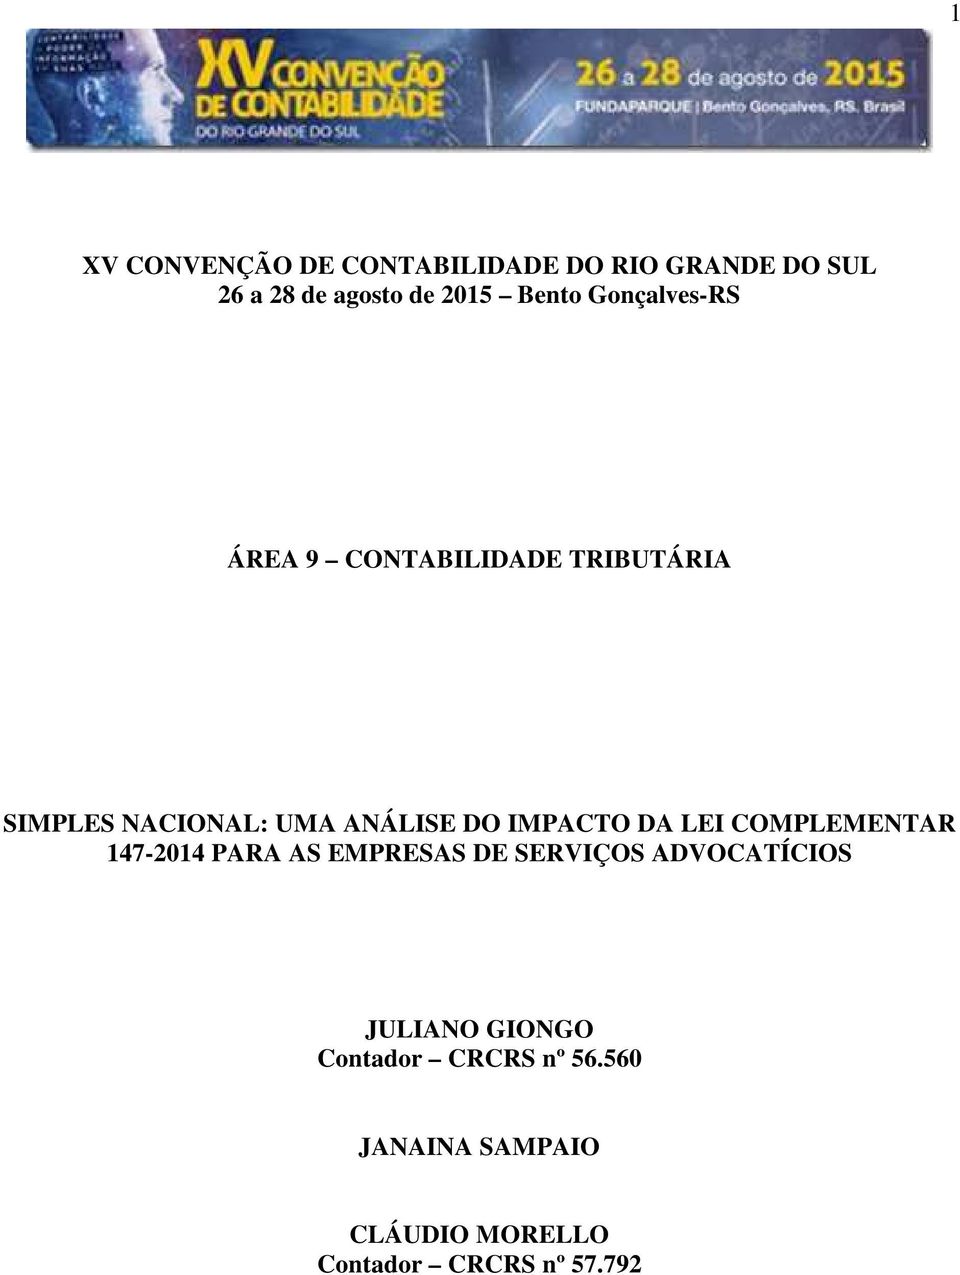 IMPACTO DA LEI COMPLEMENTAR 147-2014 PARA AS EMPRESAS DE SERVIÇOS ADVOCATÍCIOS